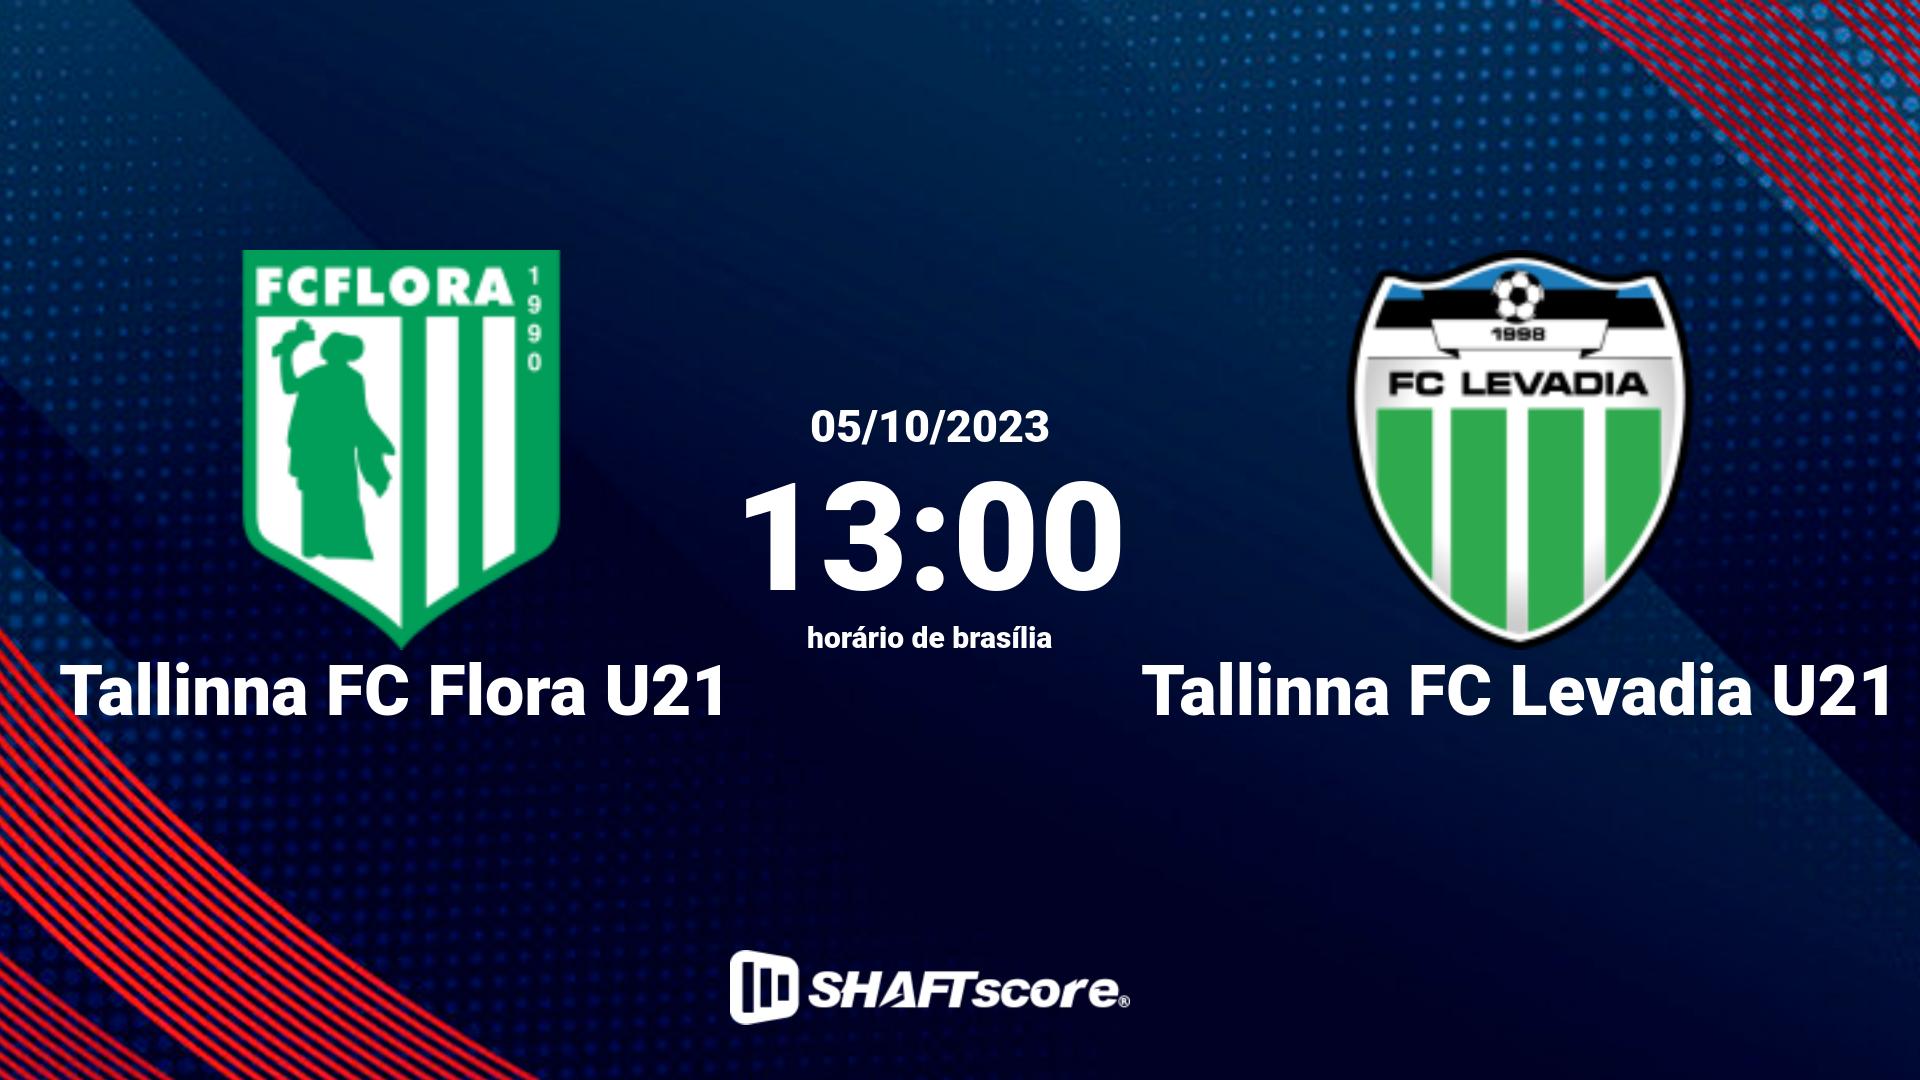 Estatísticas do jogo Tallinna FC Flora U21 vs Tallinna FC Levadia U21 05.10 13:00